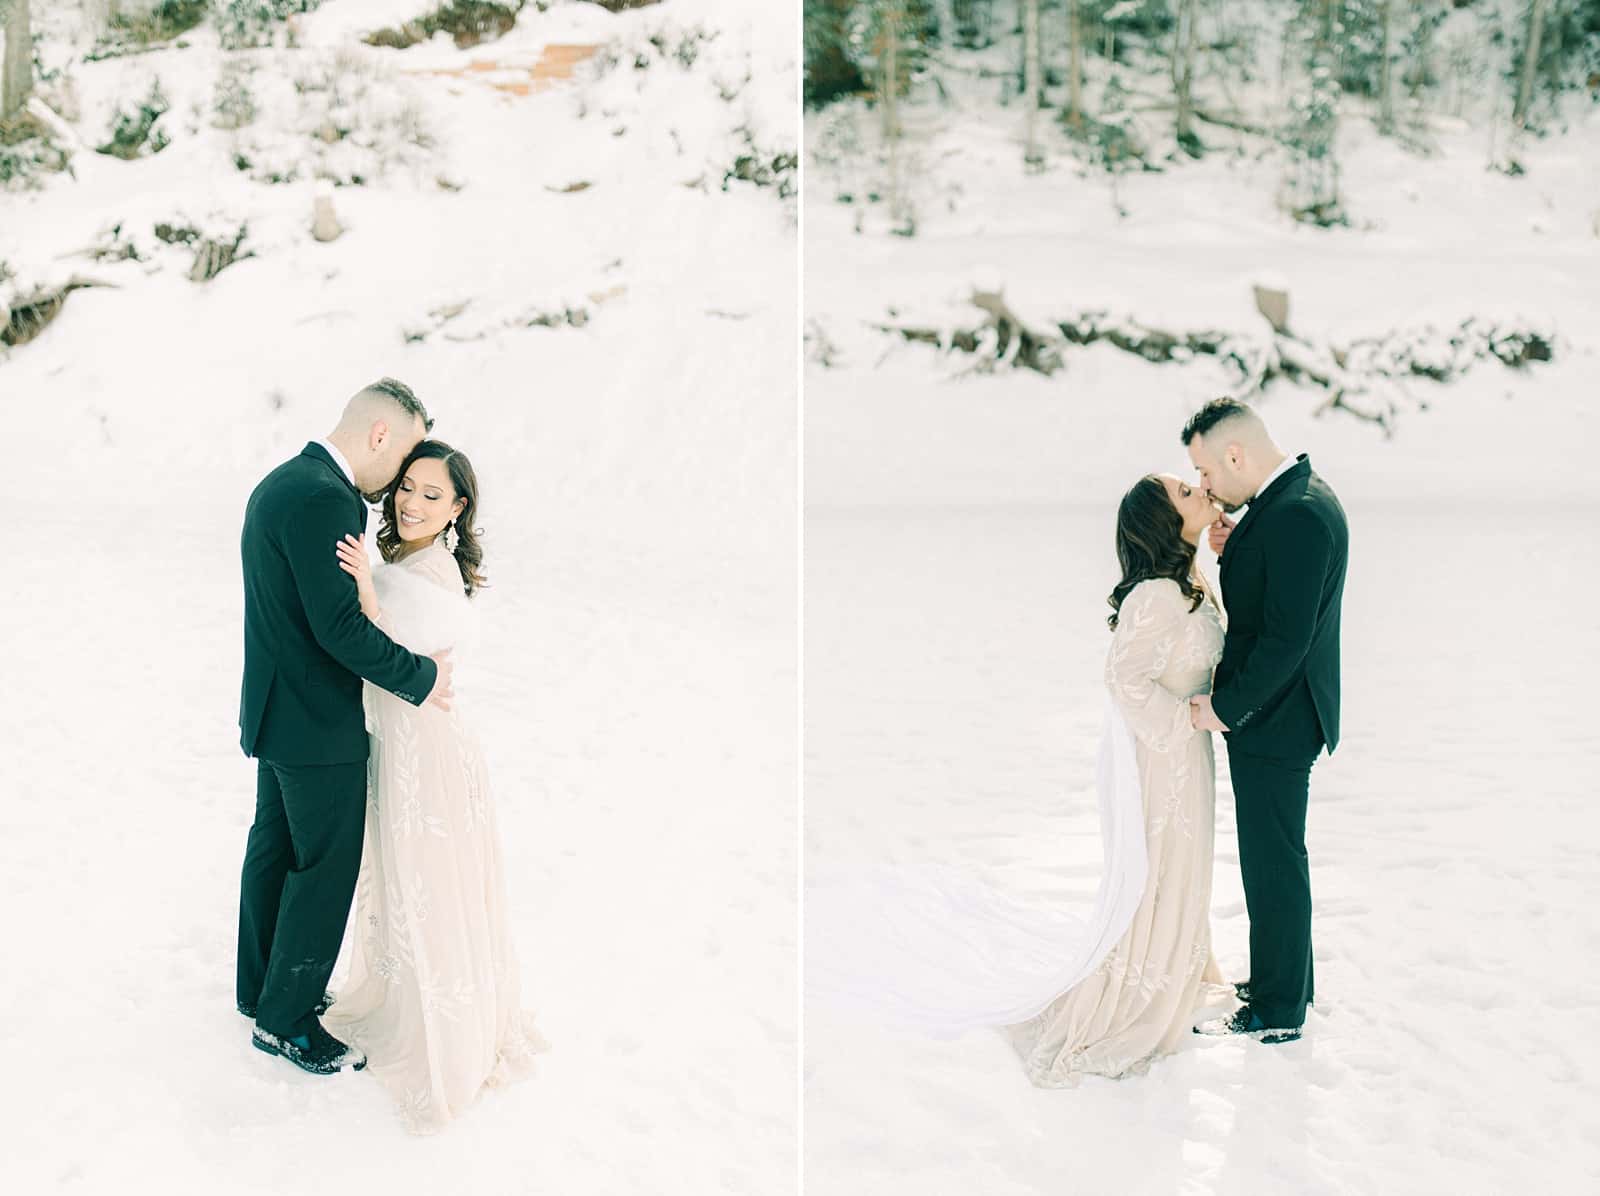 Winter bride and groom, winter wedding